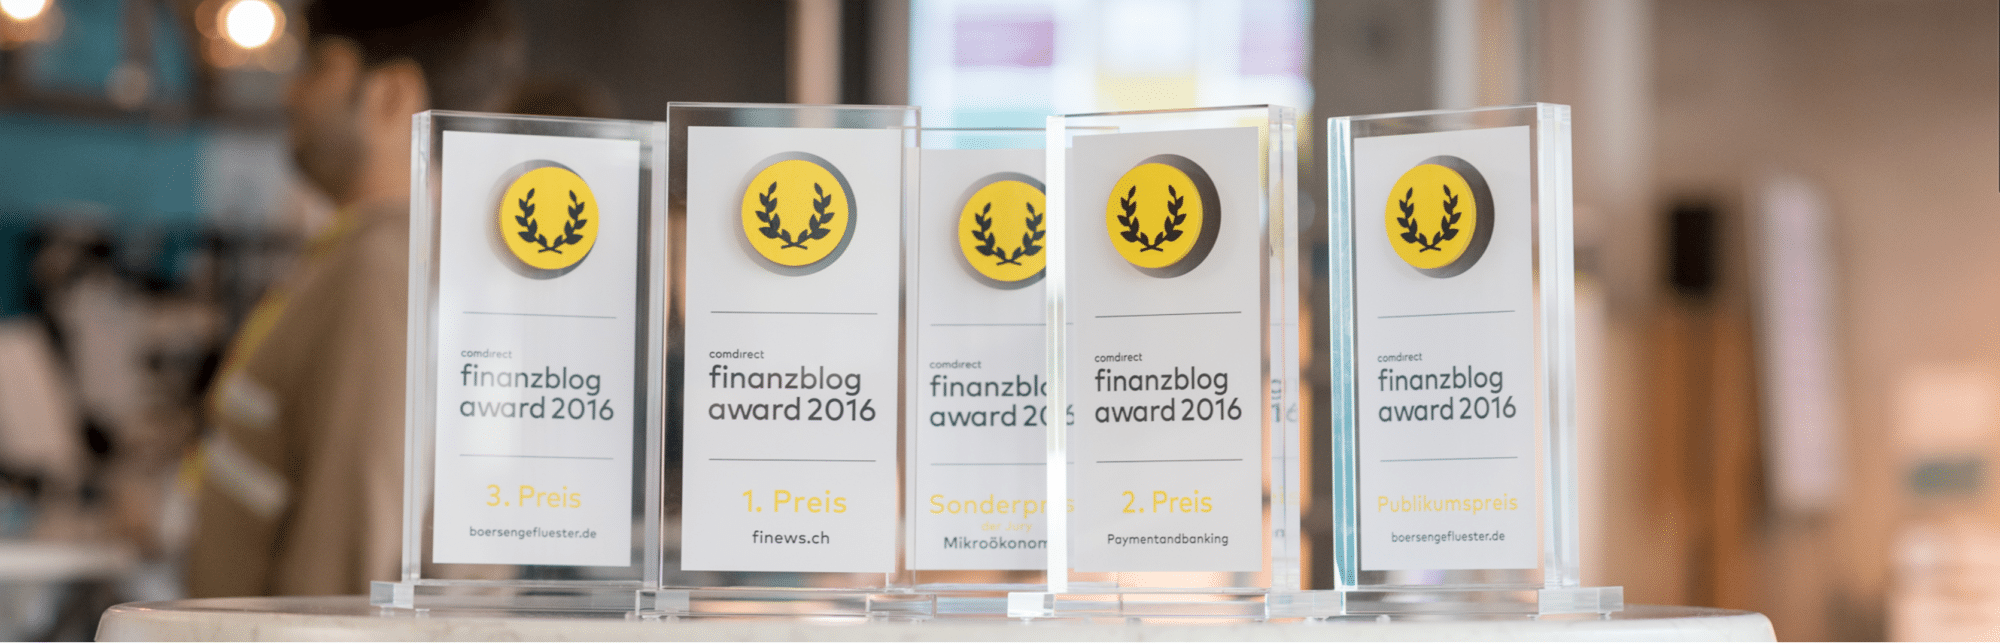 Comdirect Finanzblog Award 2017